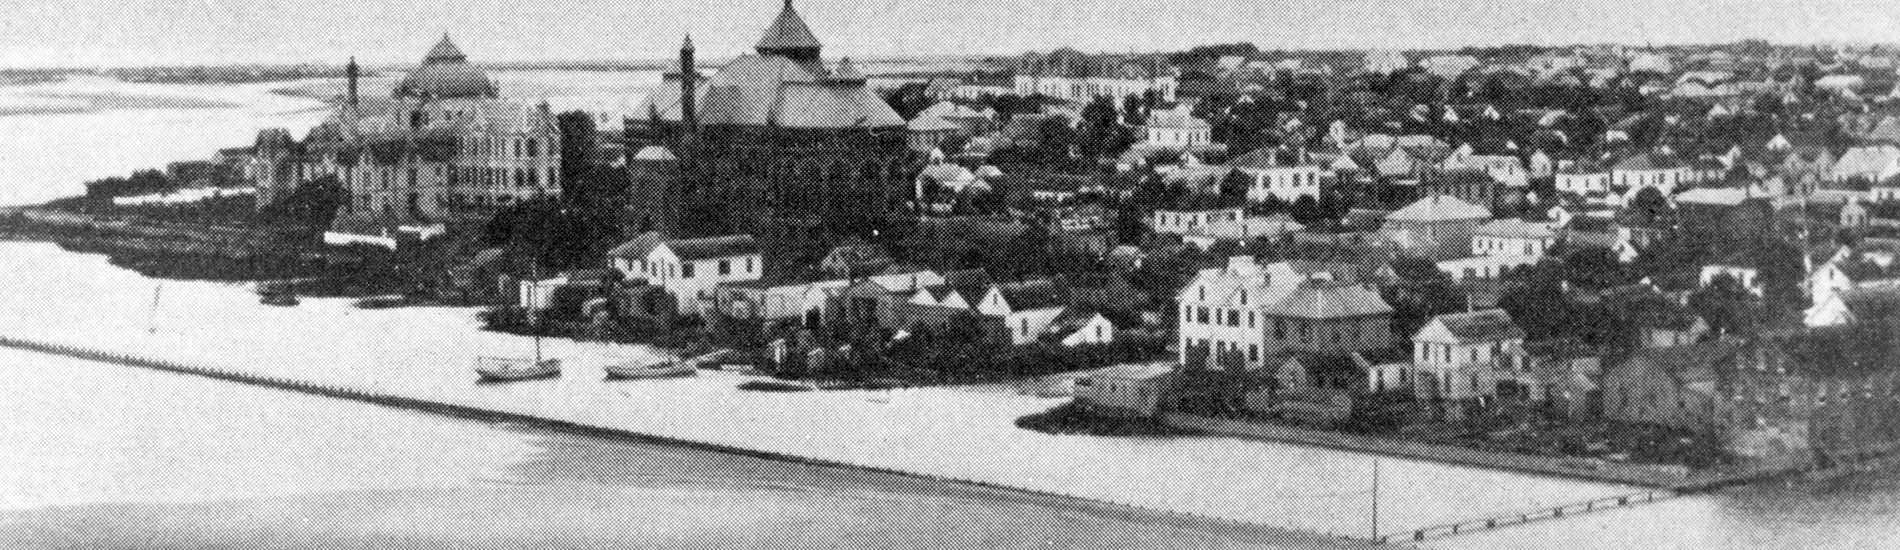 Historic aerial view of the Galveston Coast